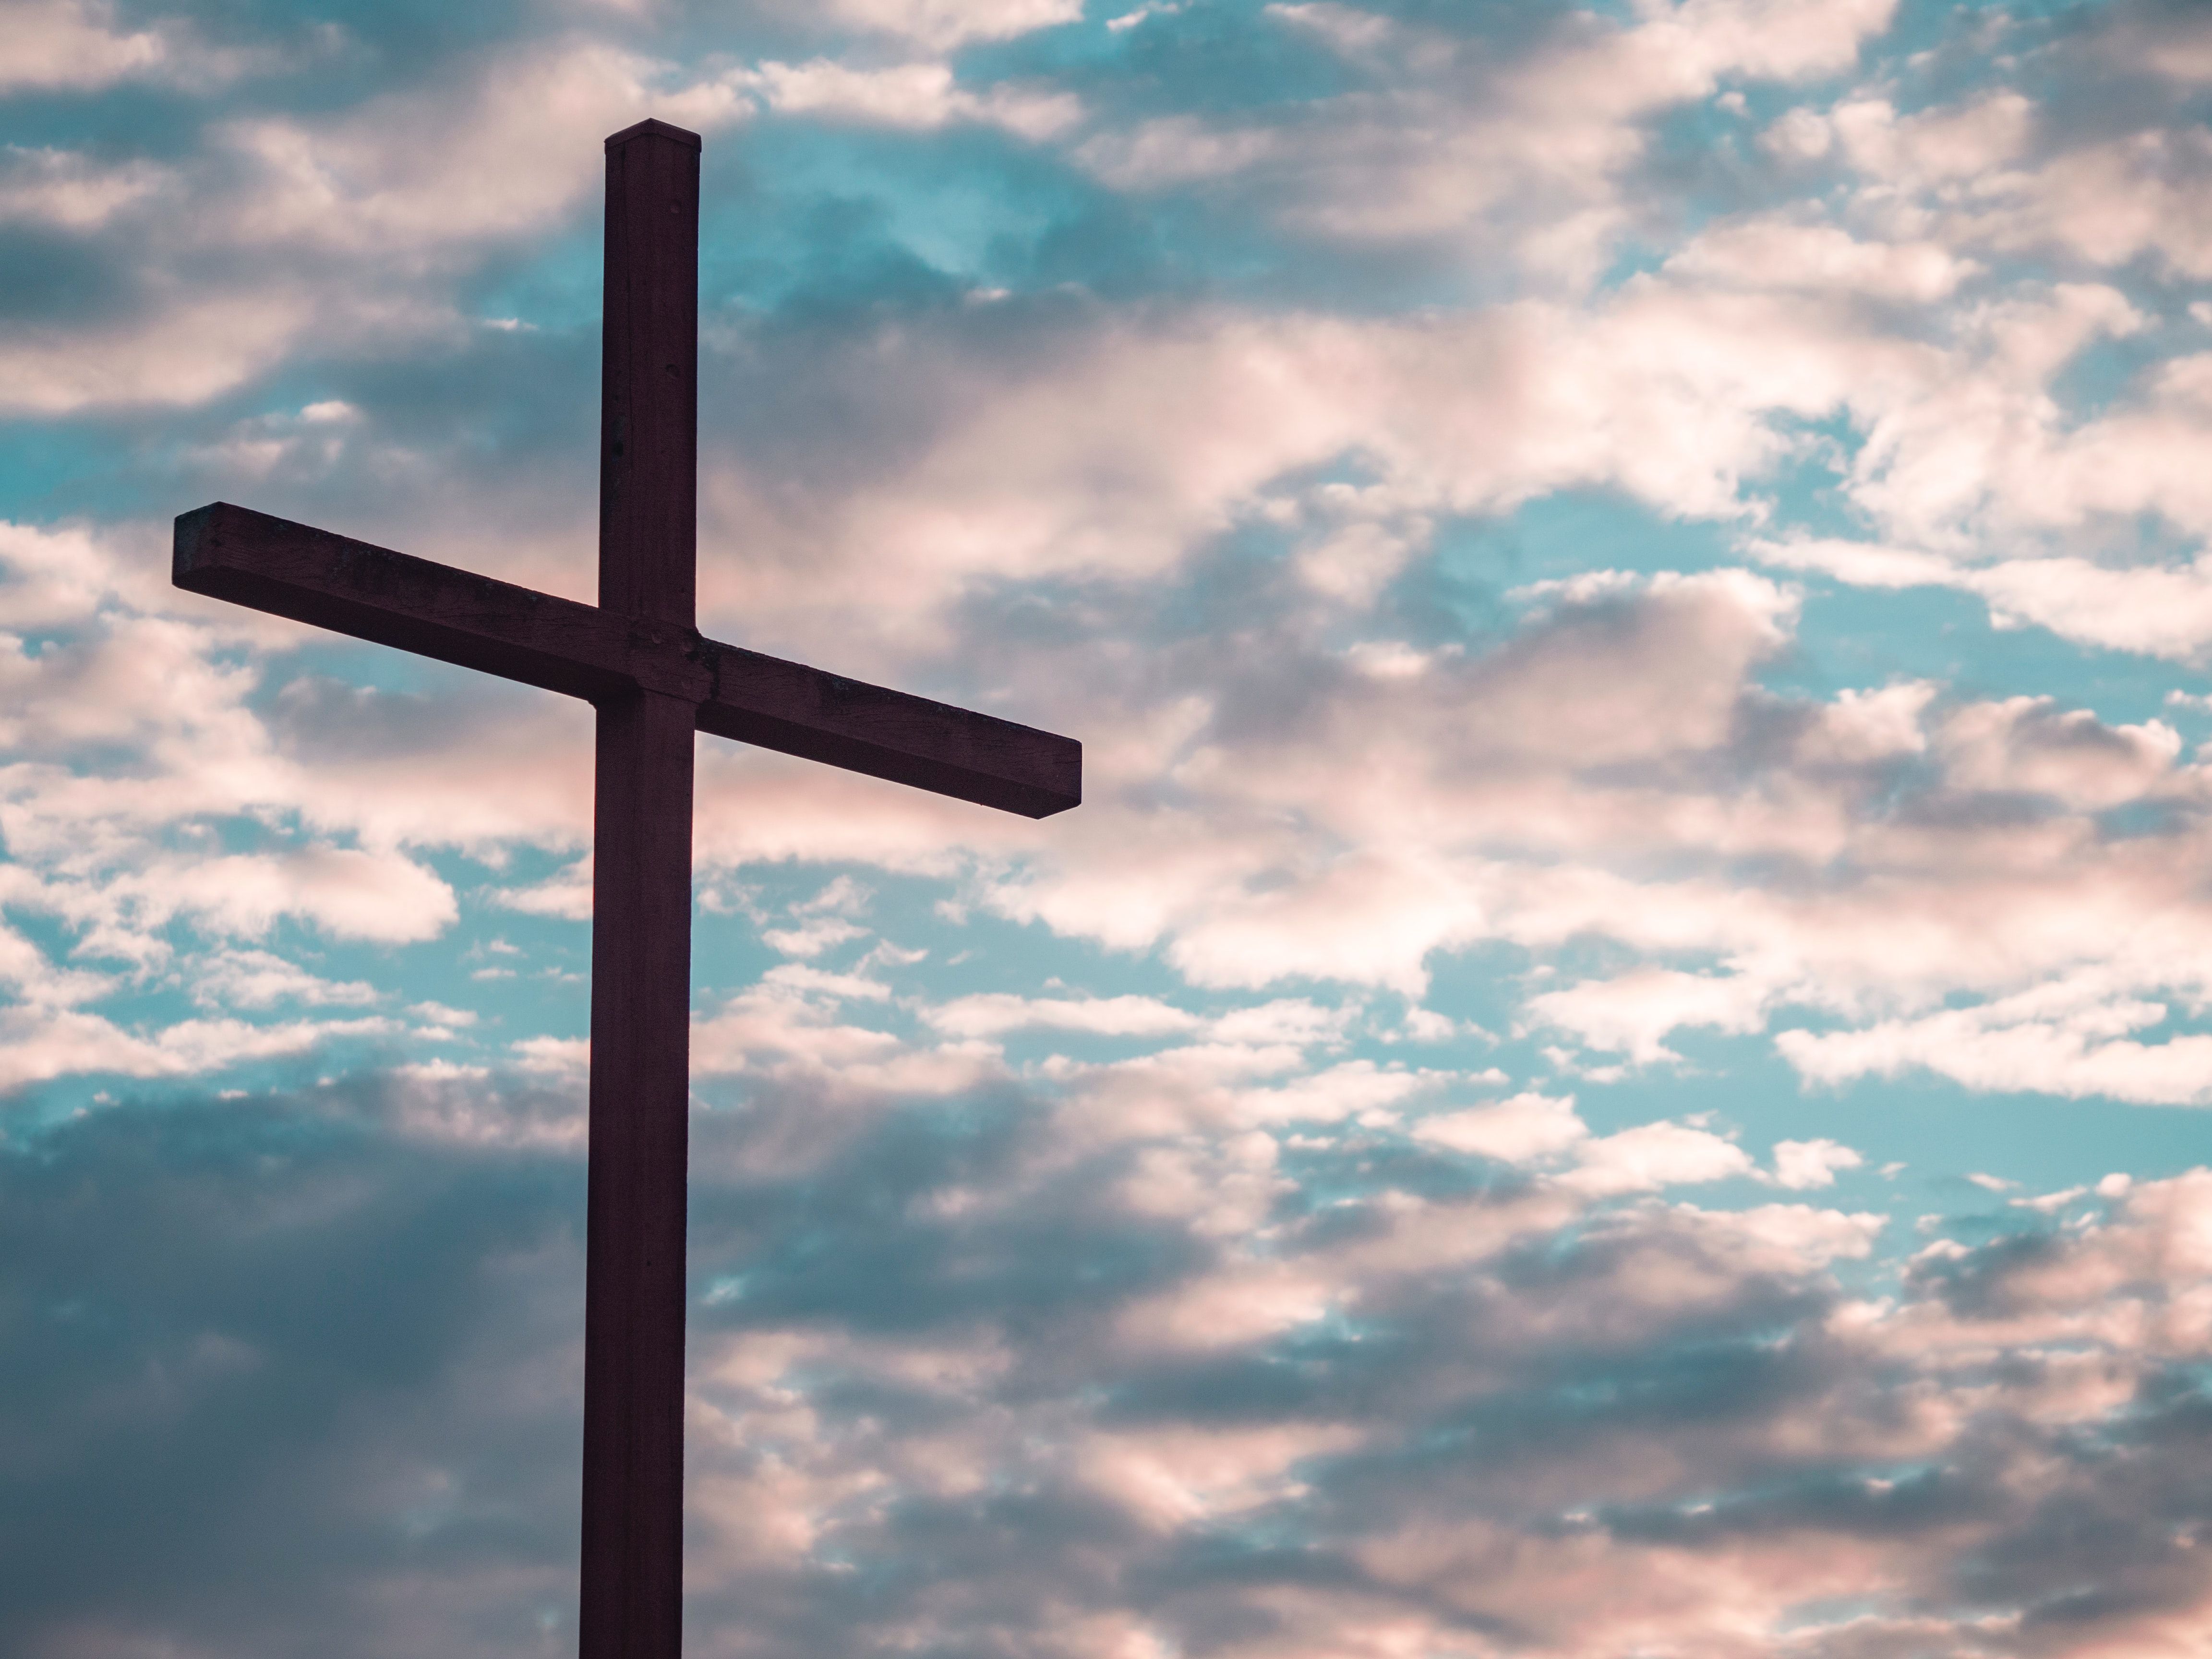 A wooden cross against a cloudy sky - Cross